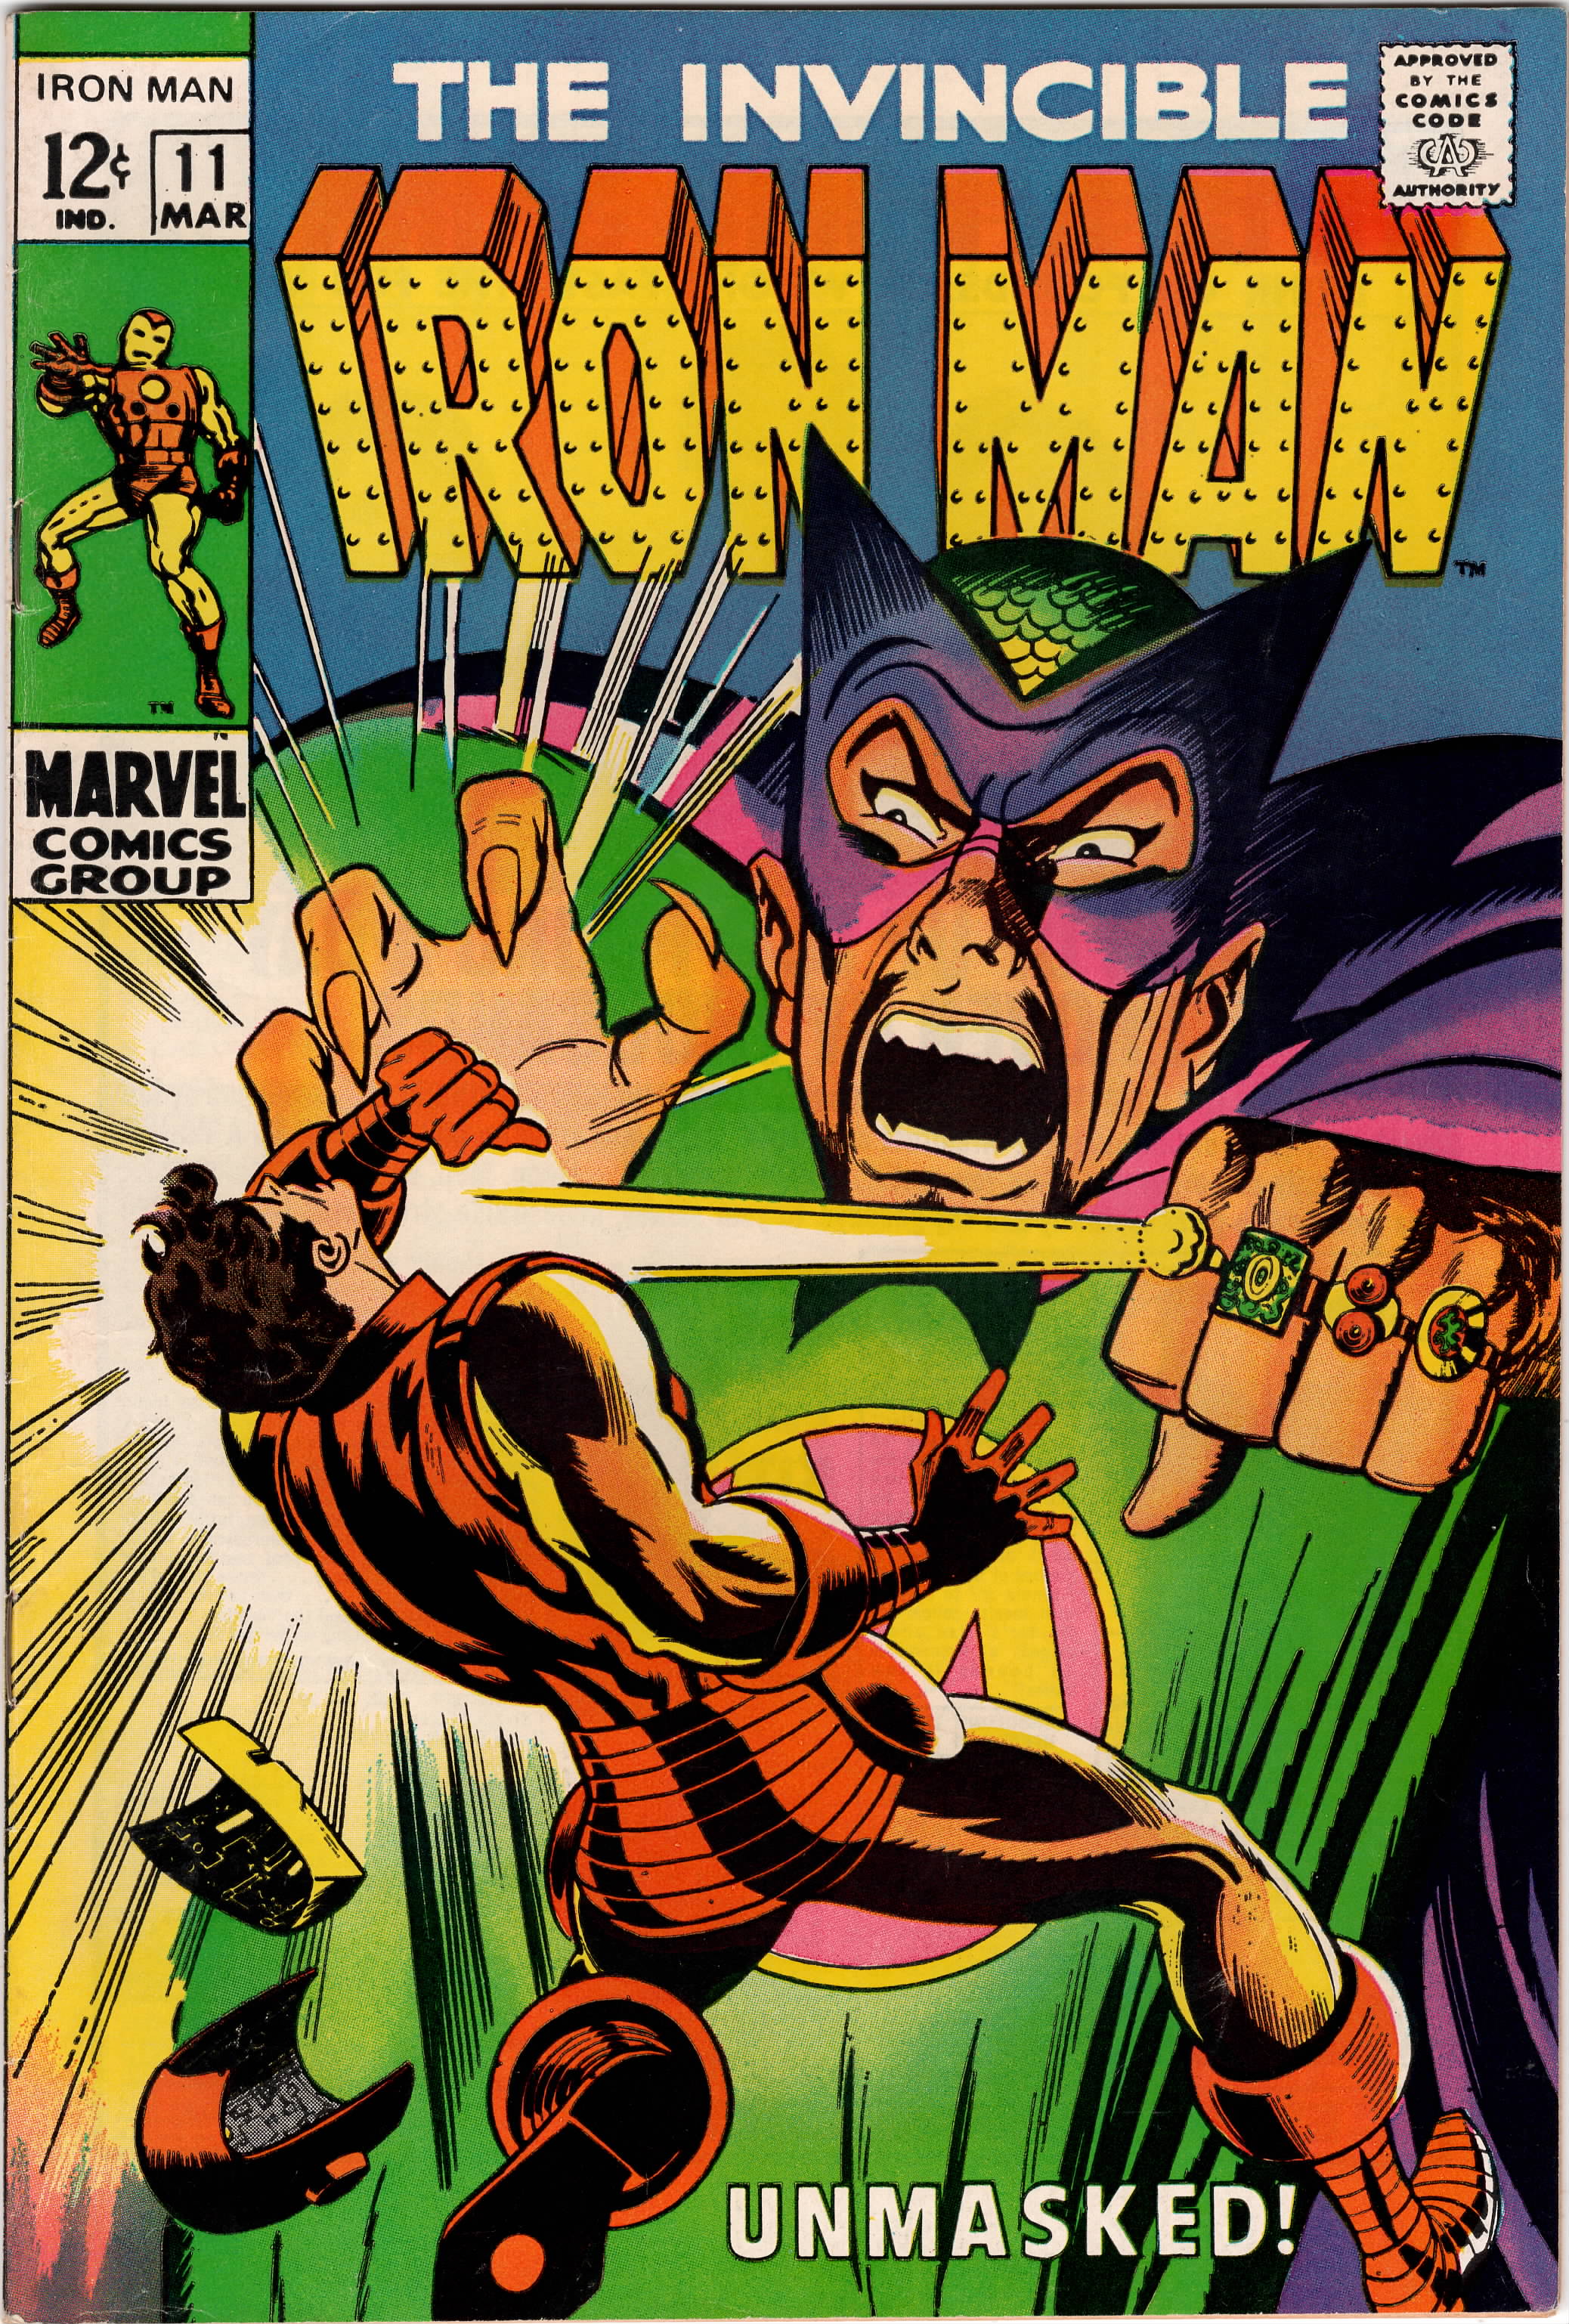 Iron Man #011